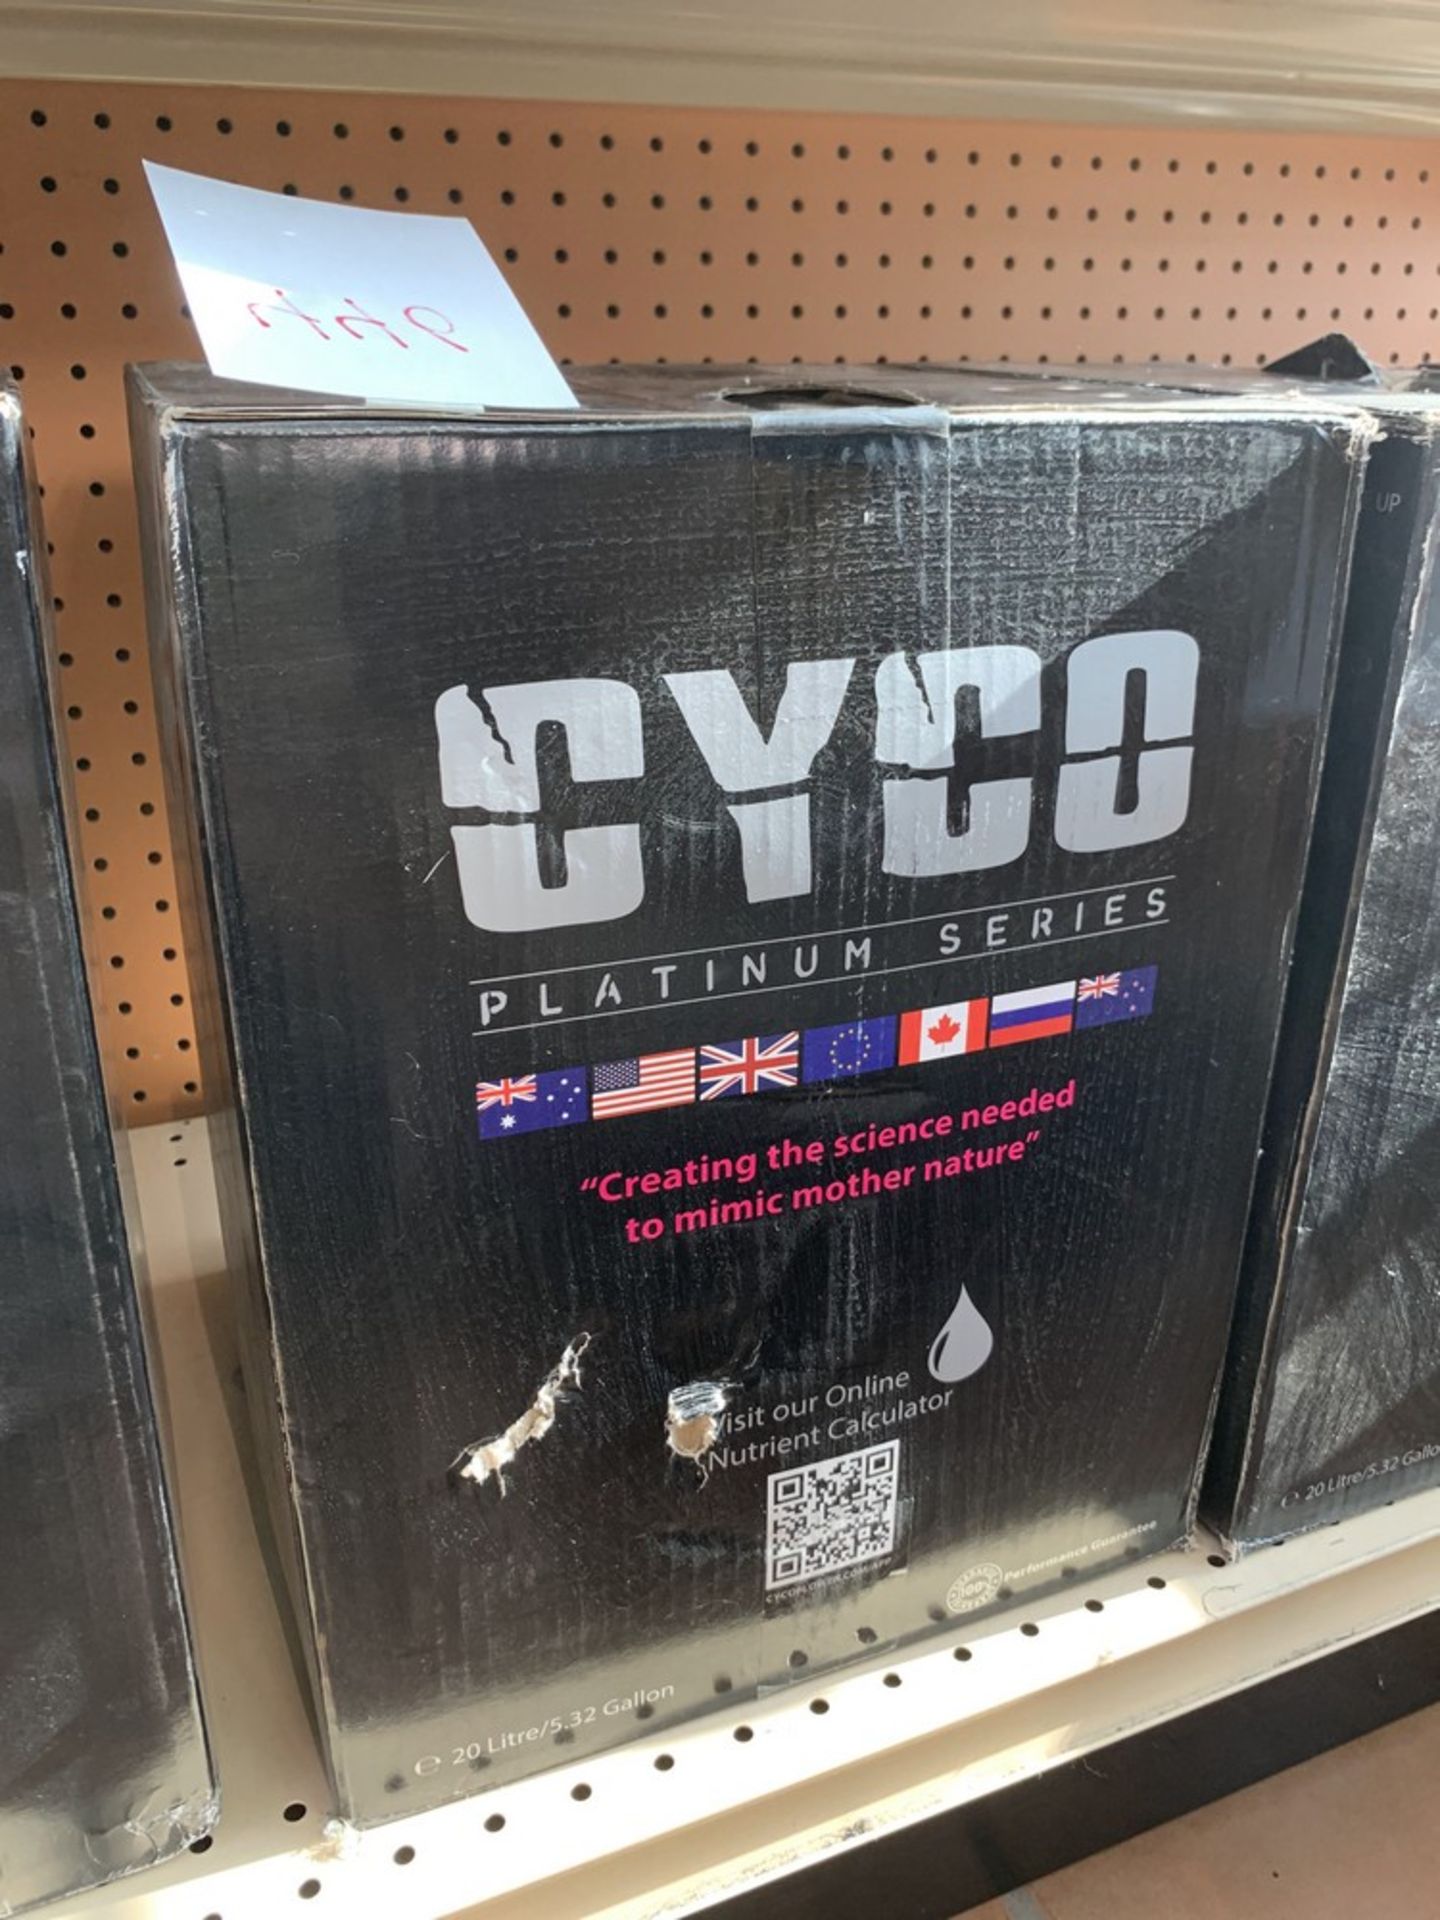 CYCO - Platinum Series Zyme, 20L - Image 2 of 2